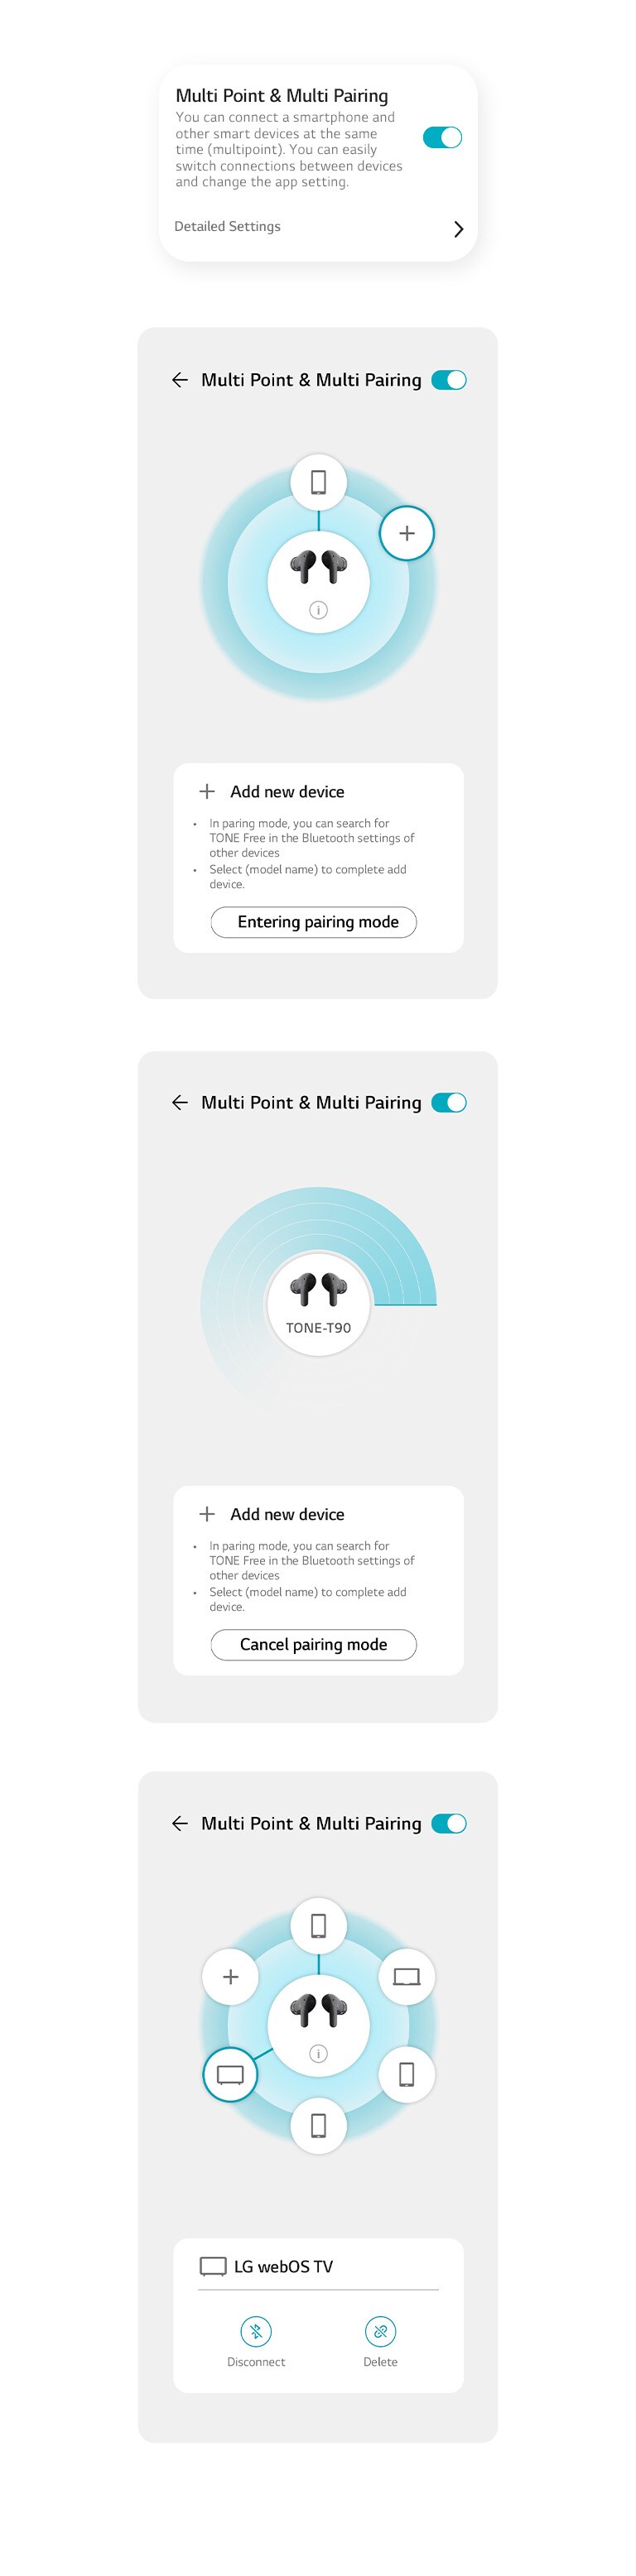 Imagens das funções Multi Point e Multi Pairing no app.